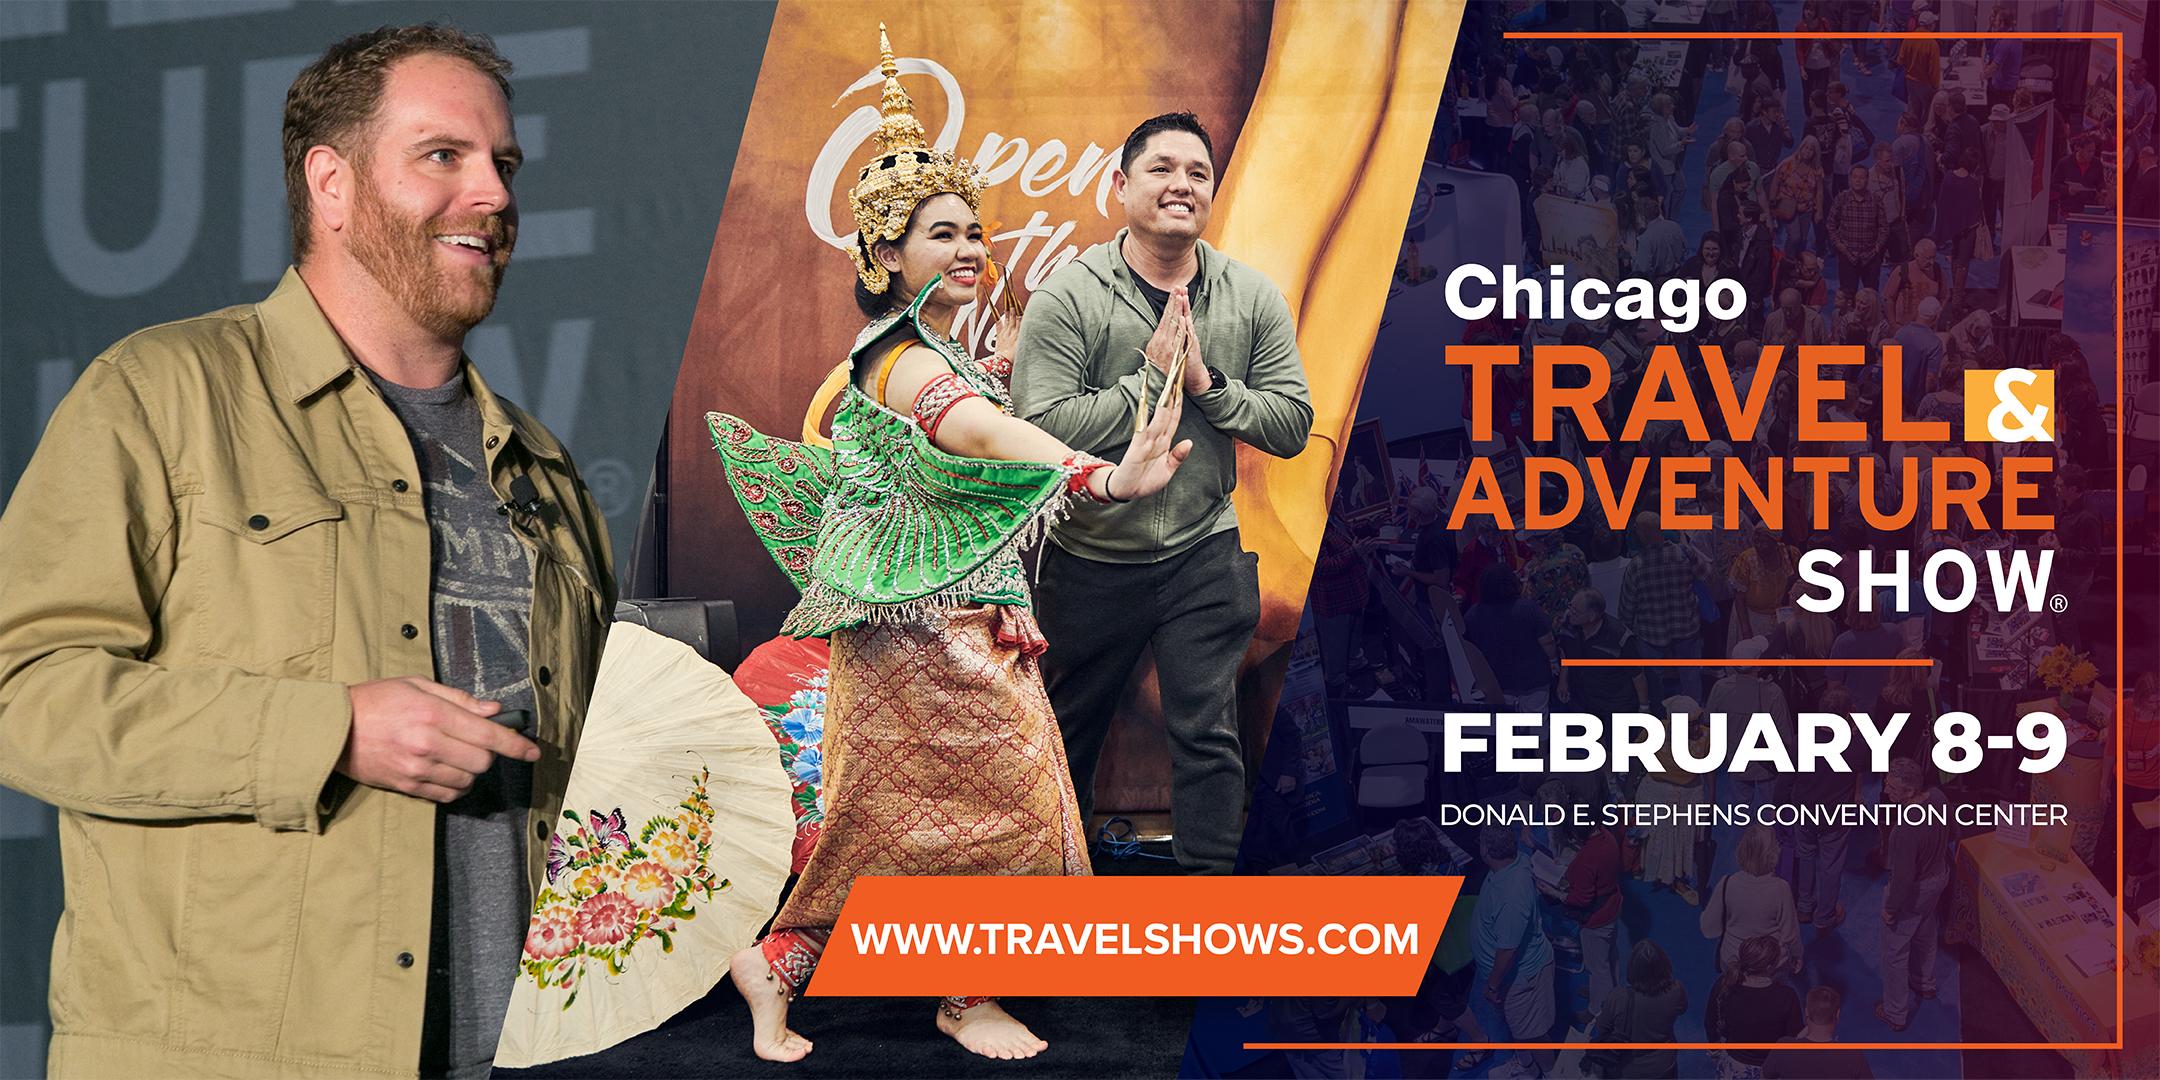 travel adventure show chicago